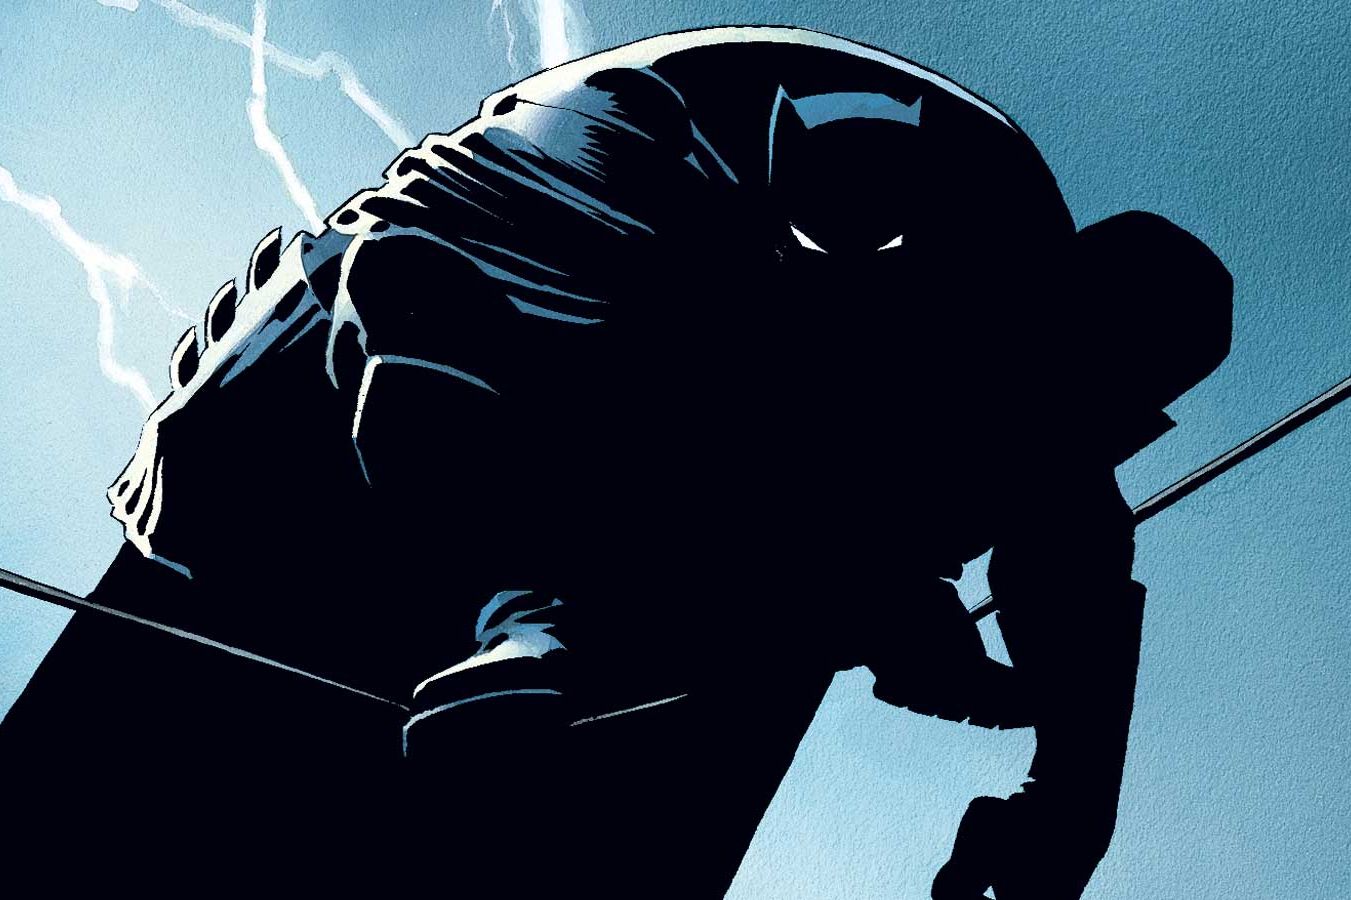 Frank Miller and Brian Azzarello Are Writing a New Batman Comic